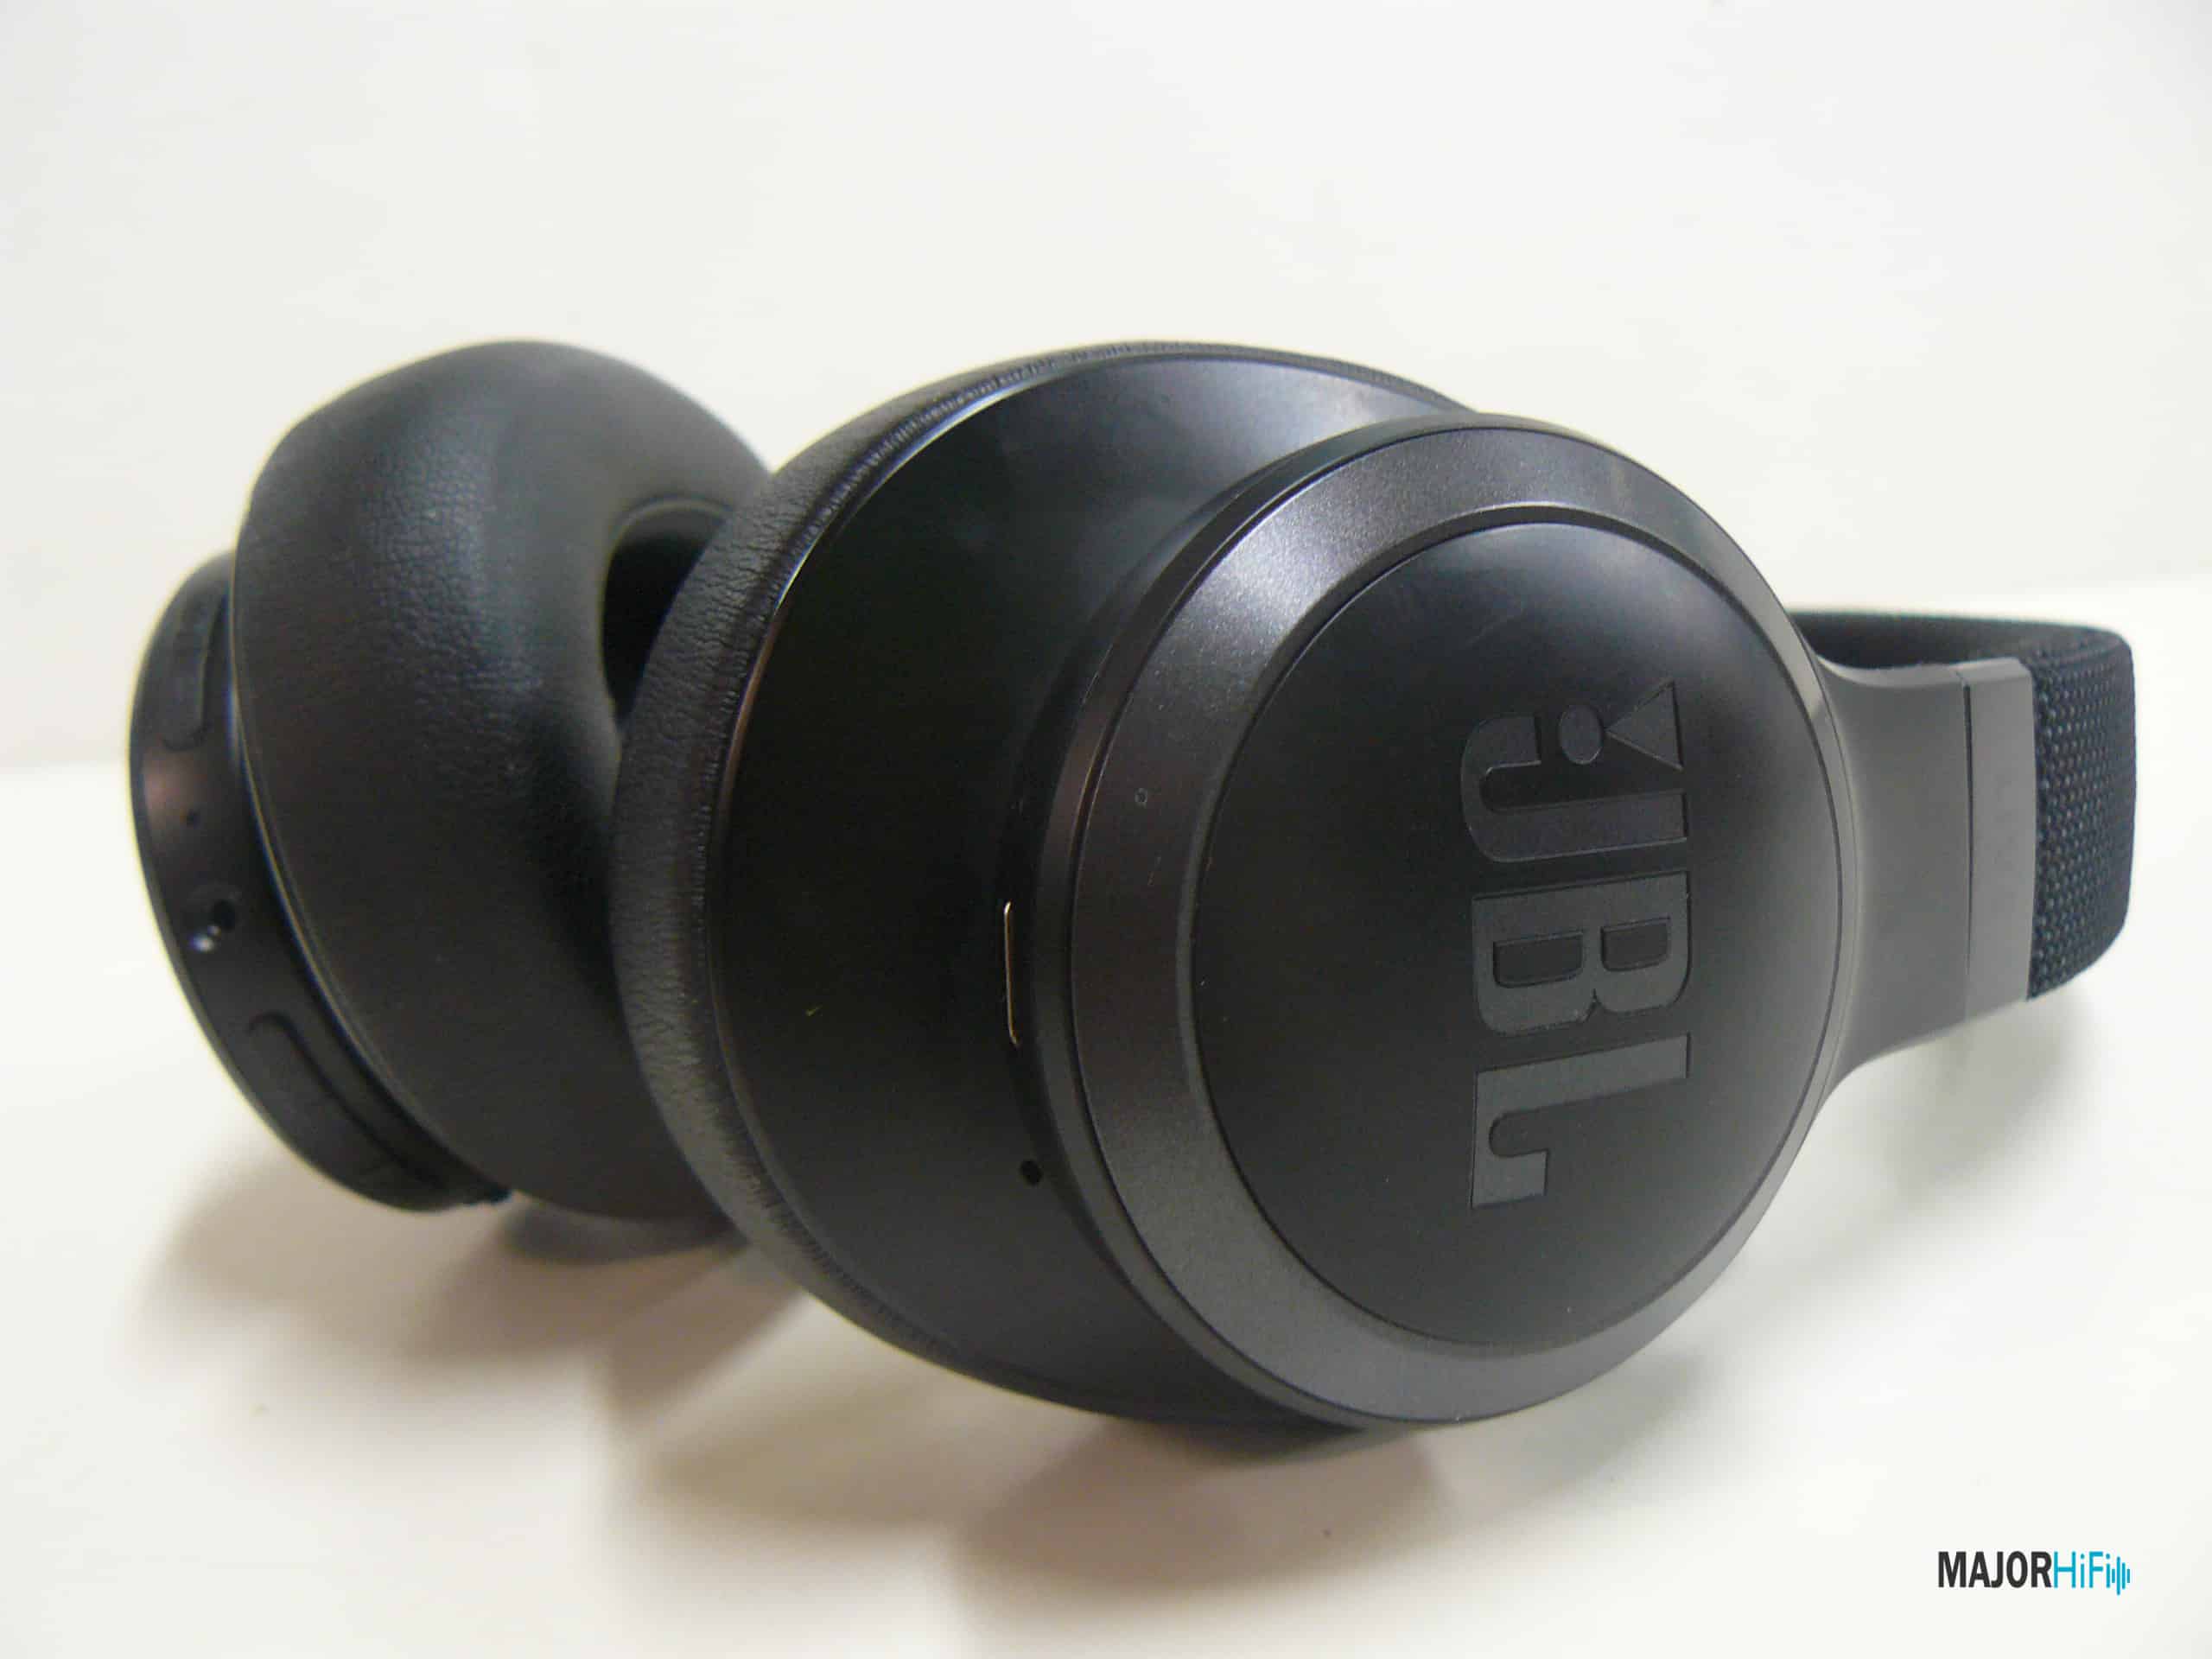 JBL Live 660NC - Wireless Over-Ear Noise Cancelling Headphones - Black